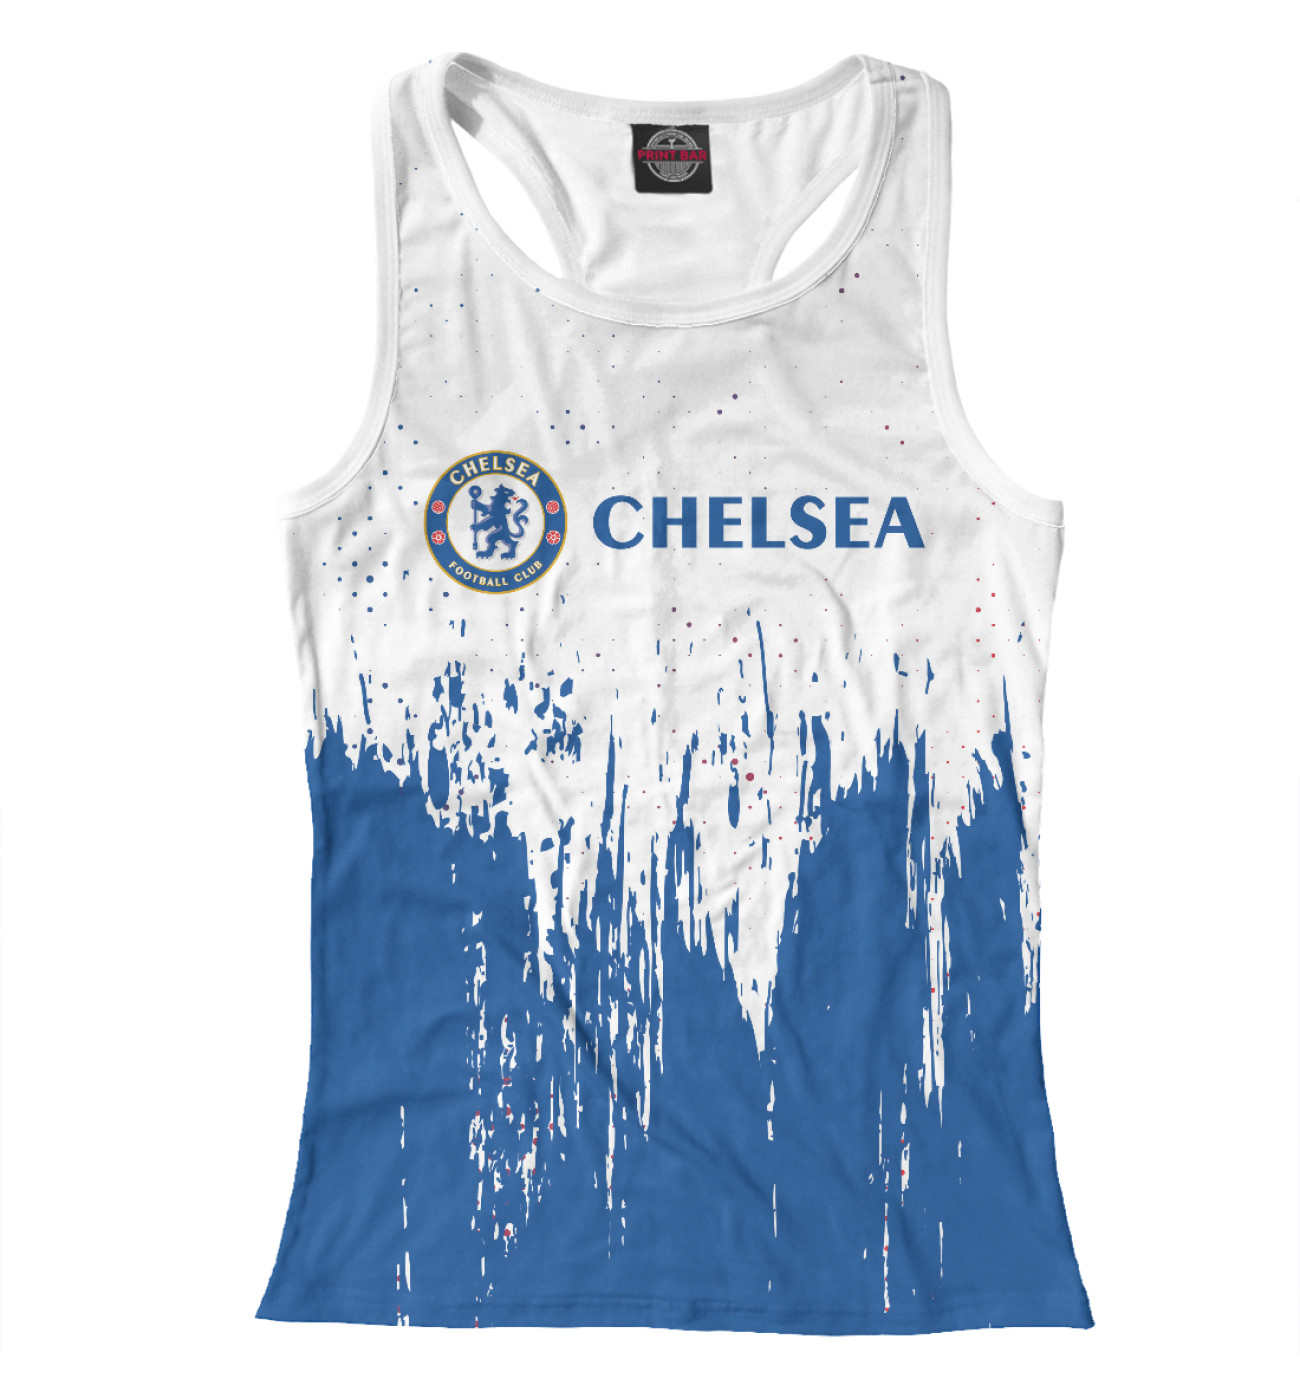 Женская Борцовка Chelsea F.C. / Челси, артикул: CHL-759247-mayb-1